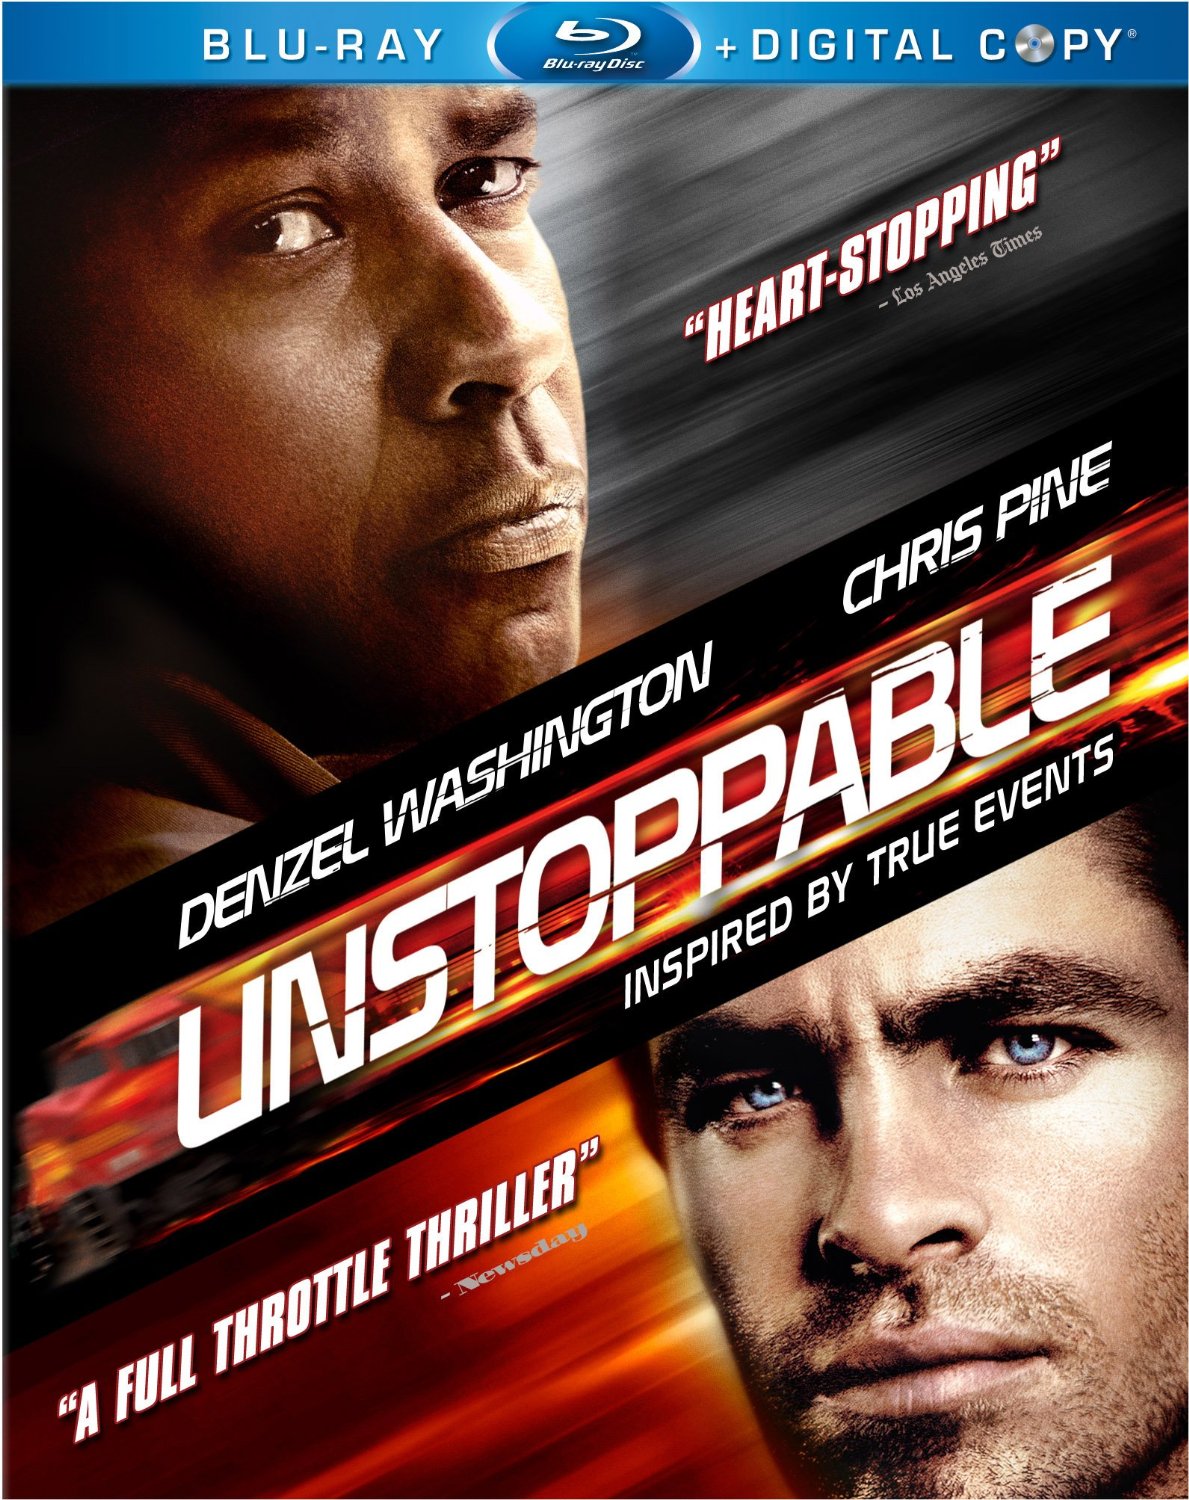 Unstoppable (2010) Denzel Washington - Movie Trailer, DVD, Blu-ray, Cast, Plot1189 x 1500